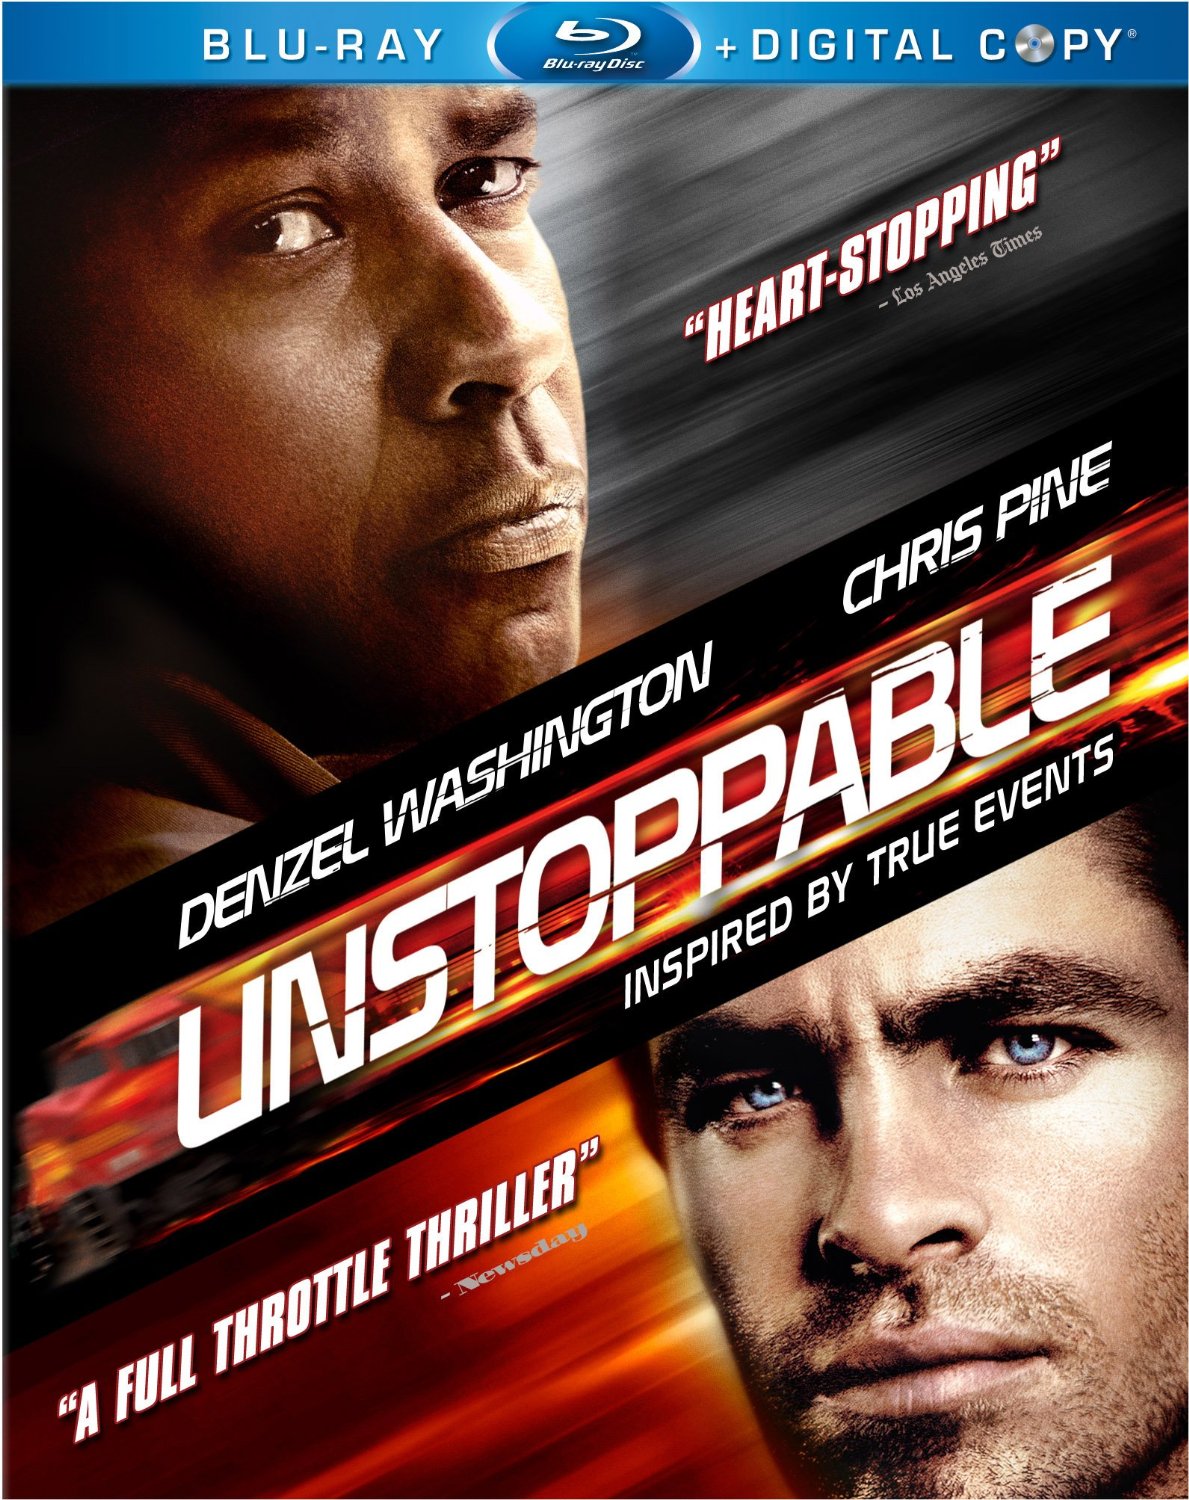 Unstoppable (2010) Denzel Washington - Movie Trailer, DVD, Blu-ray, Cast, Plot1189 x 1500